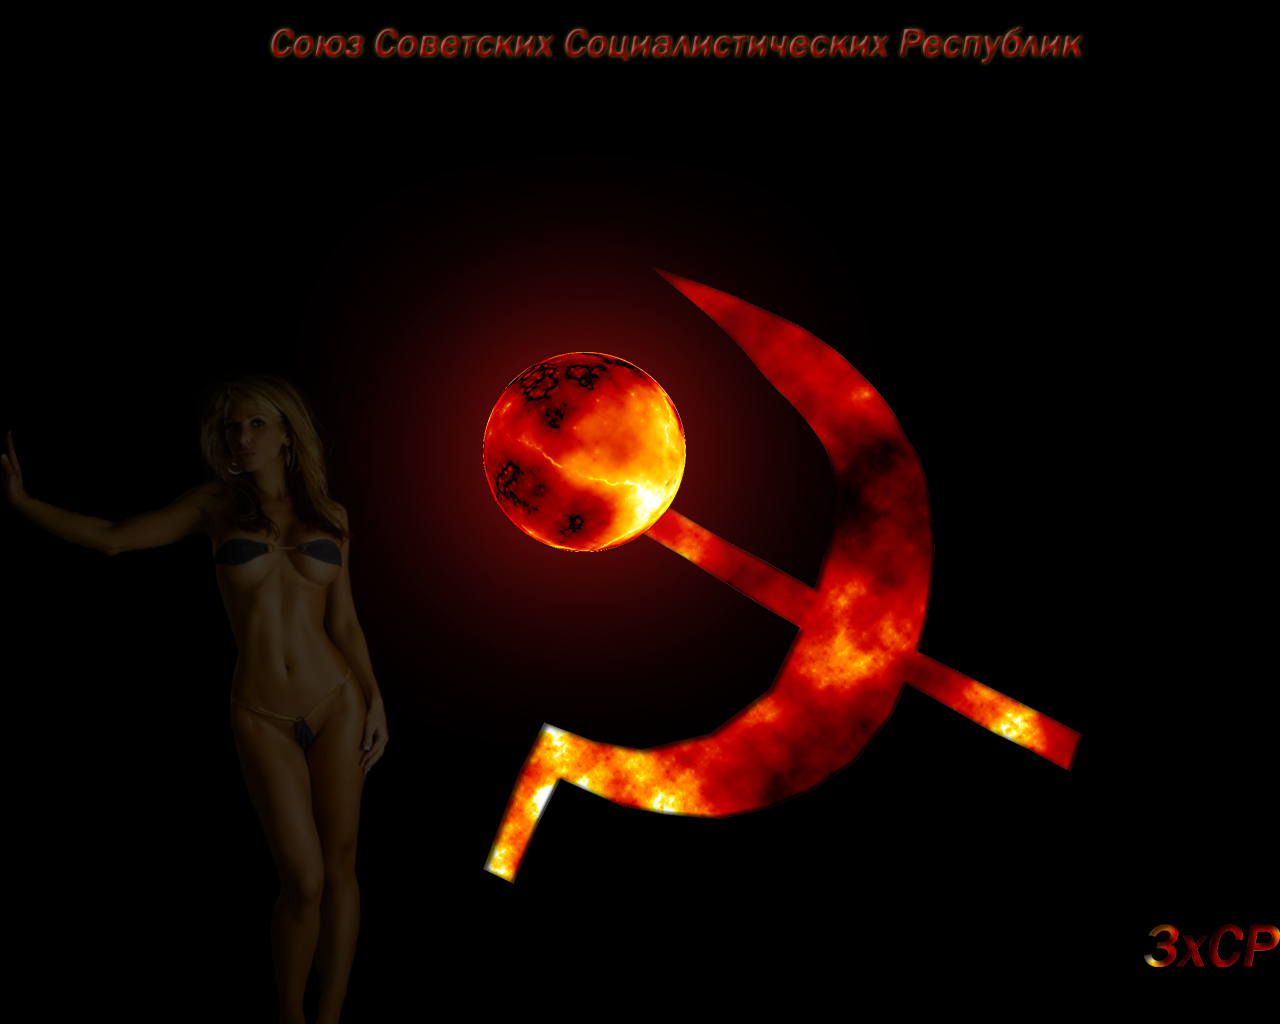 Soviet Union Wallpaper Puter The